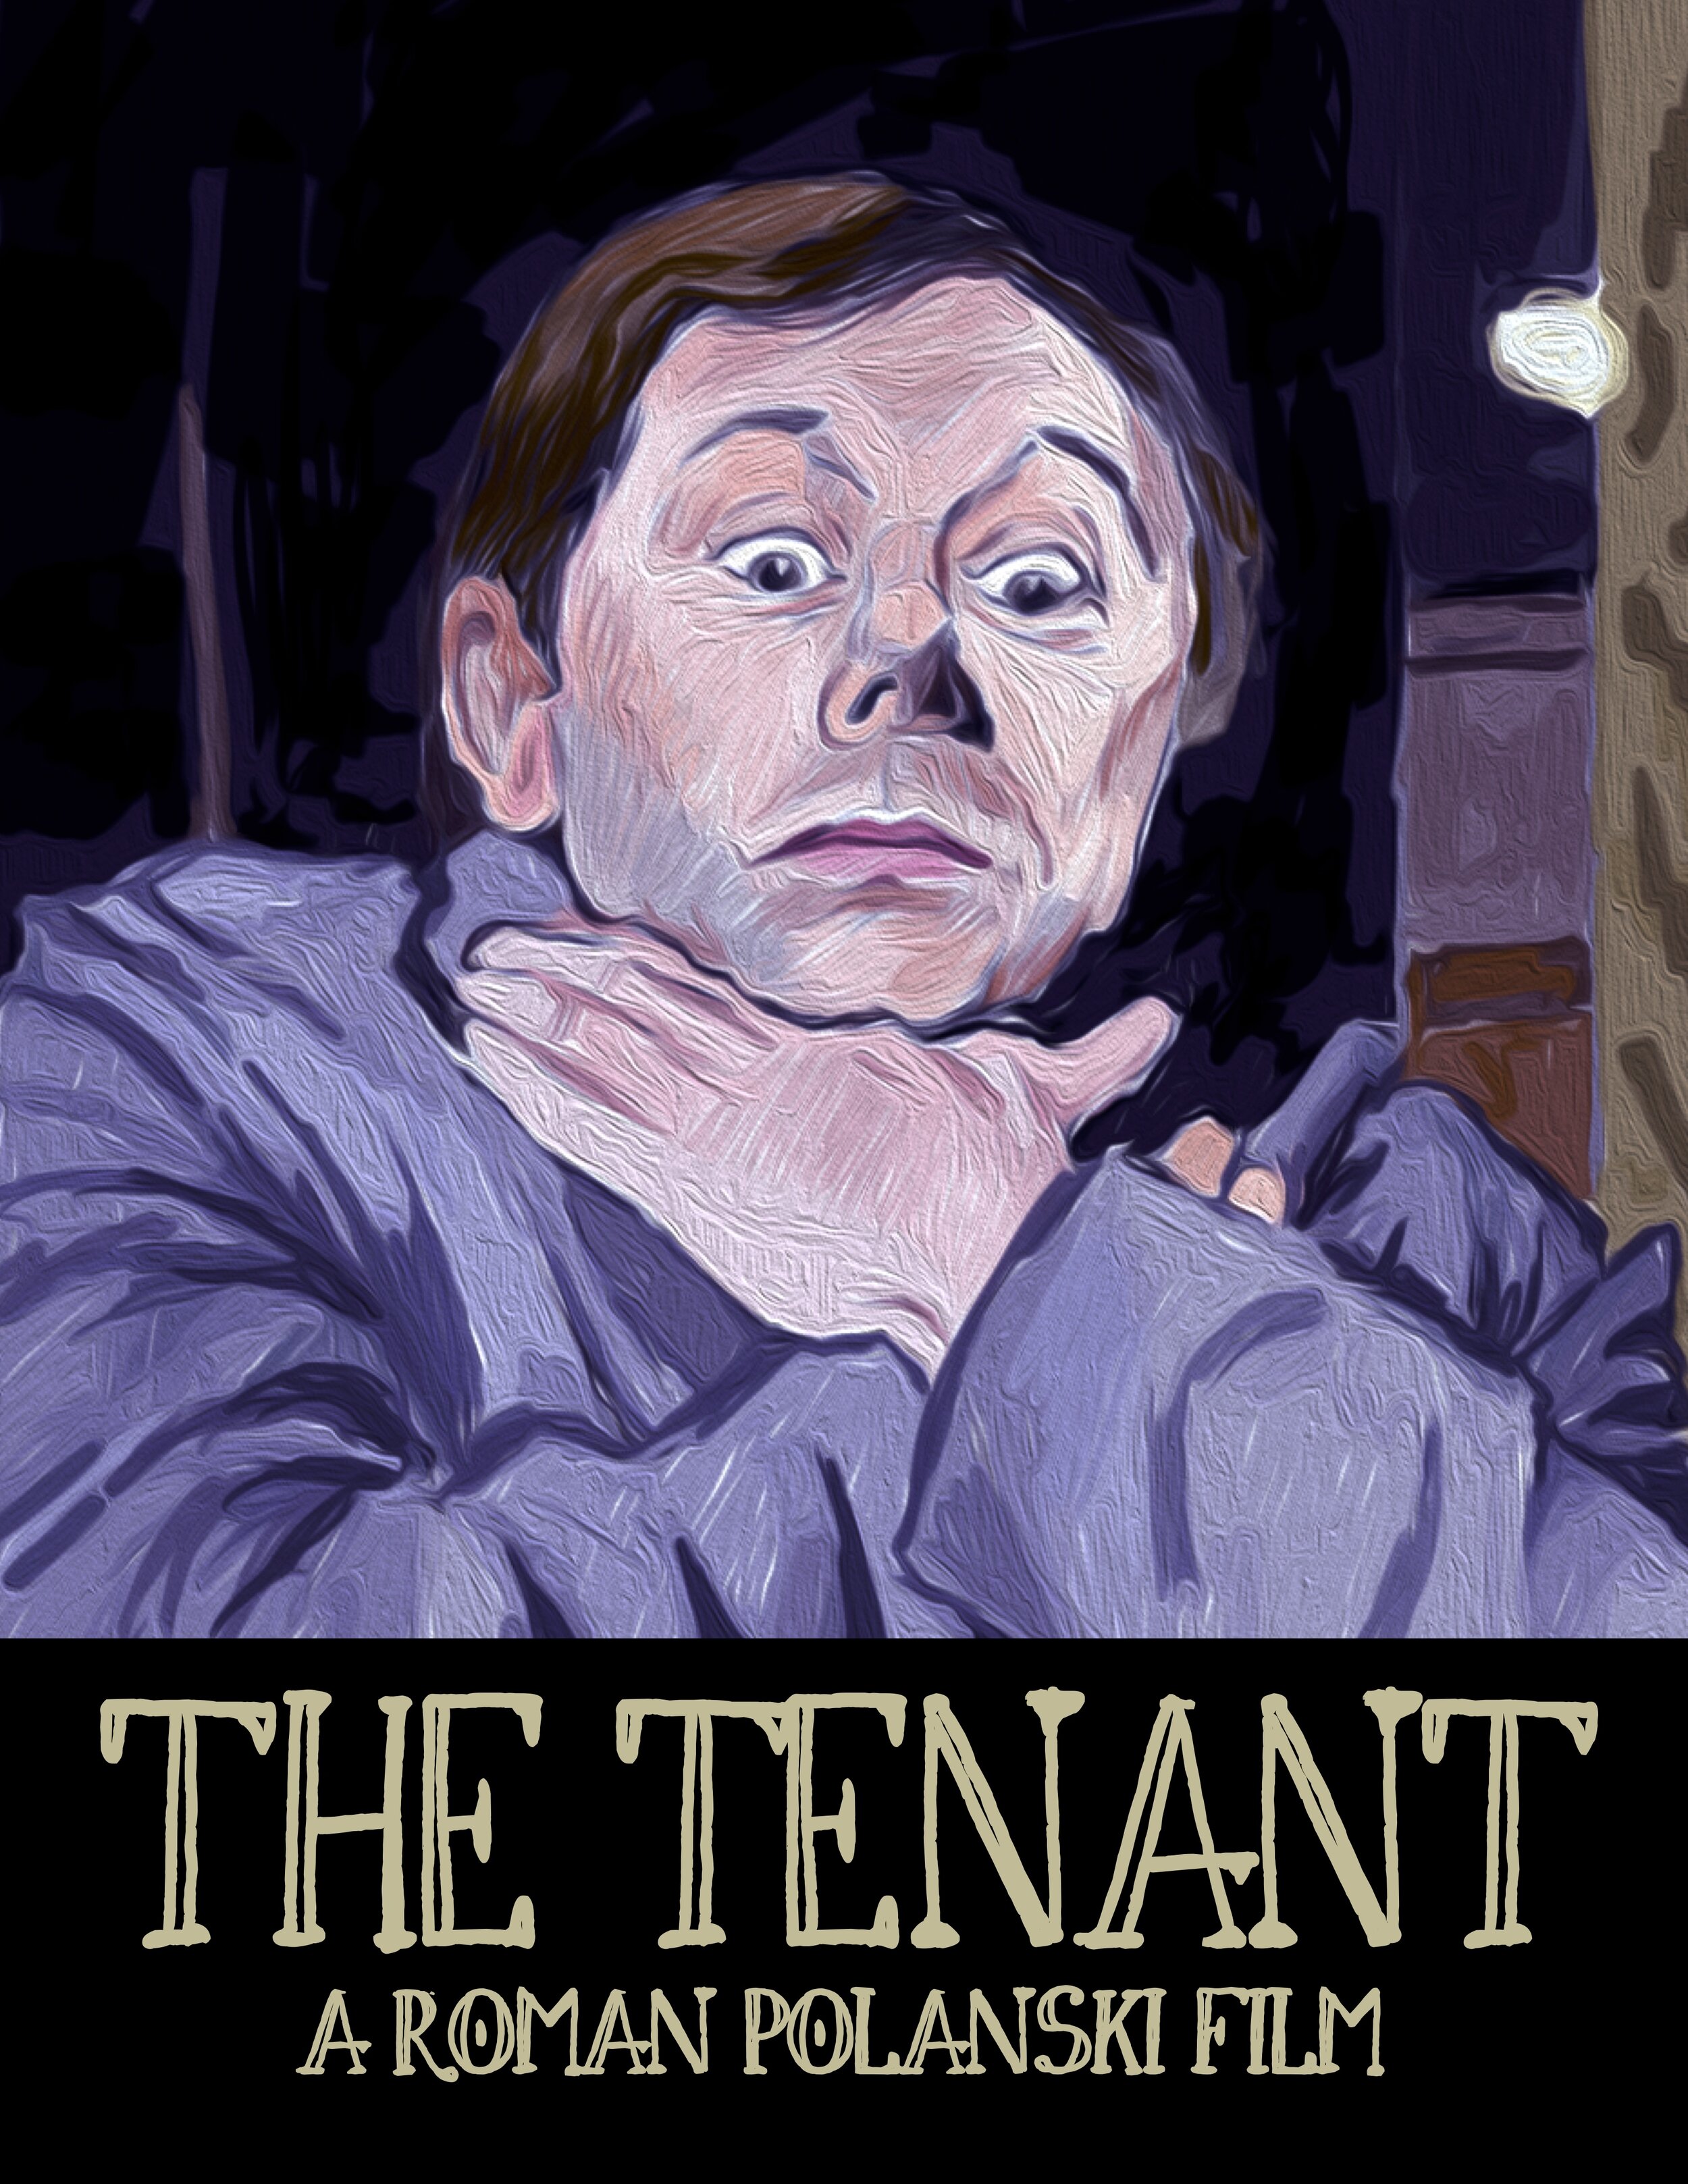 The Tenant (1976)